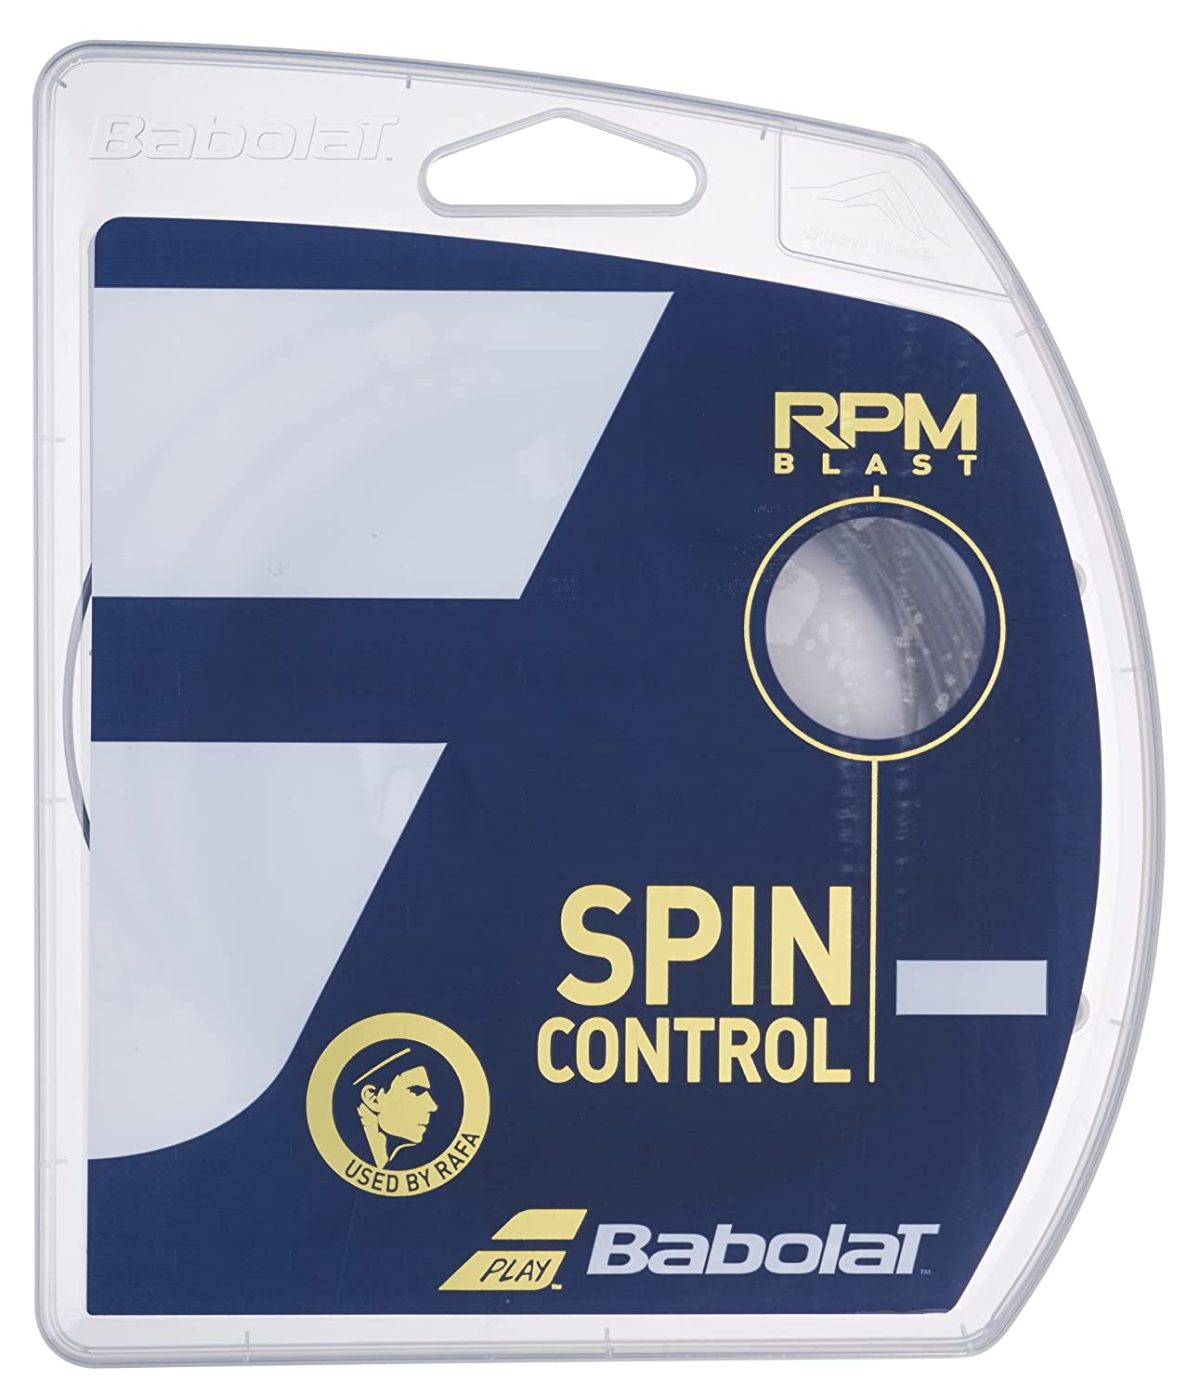 Babolat RPM BLAST 12M (SPIN/CONTROL) - Black